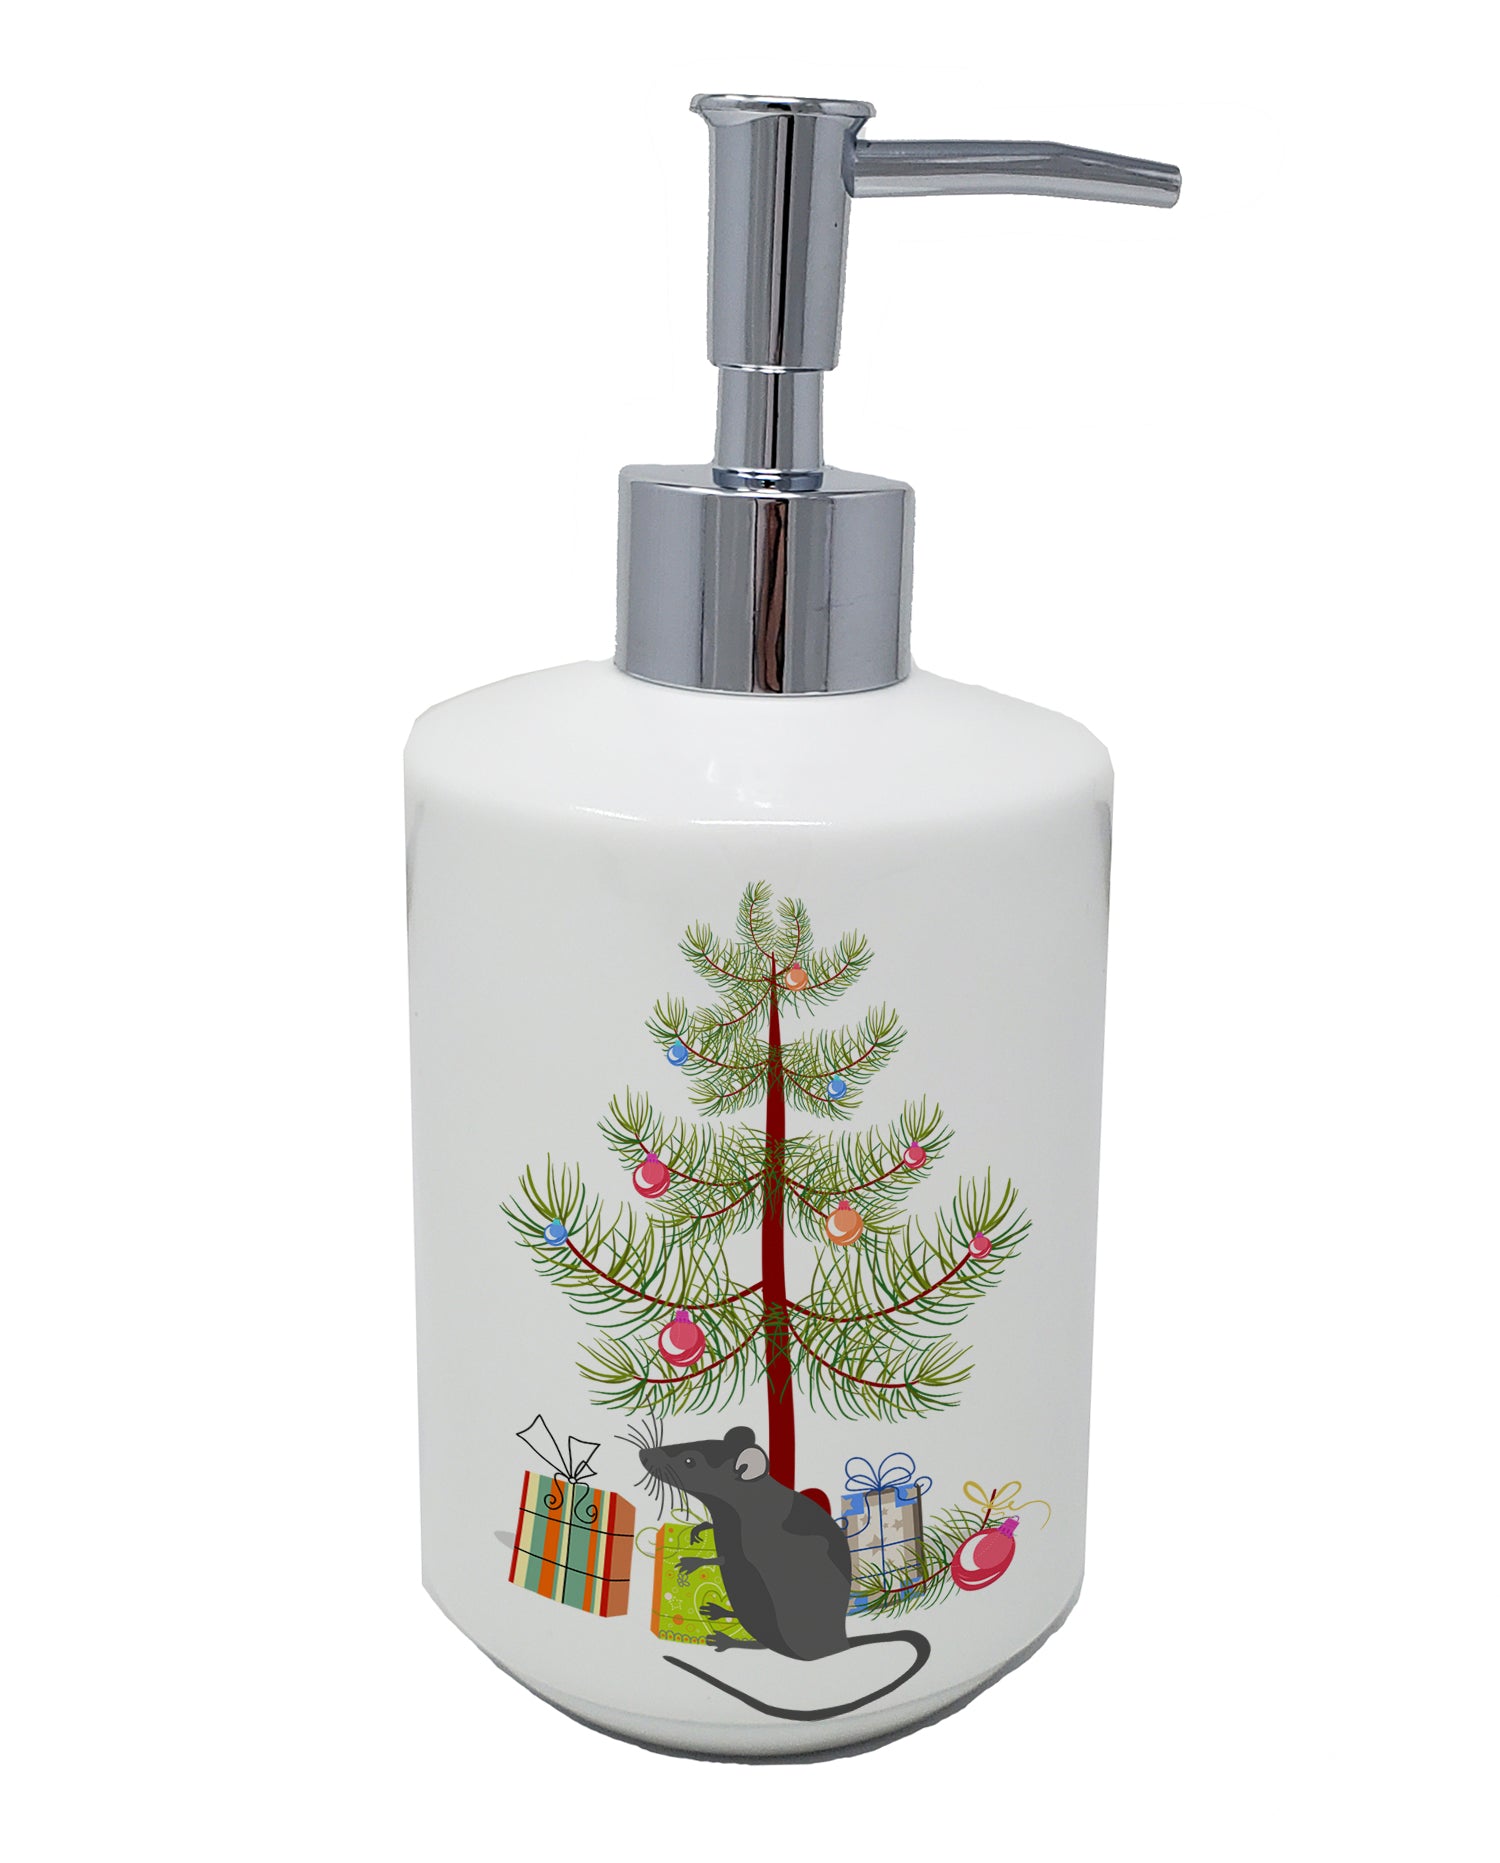 Buy this Satin Mouse Merry Christmas Ceramic Soap Dispenser